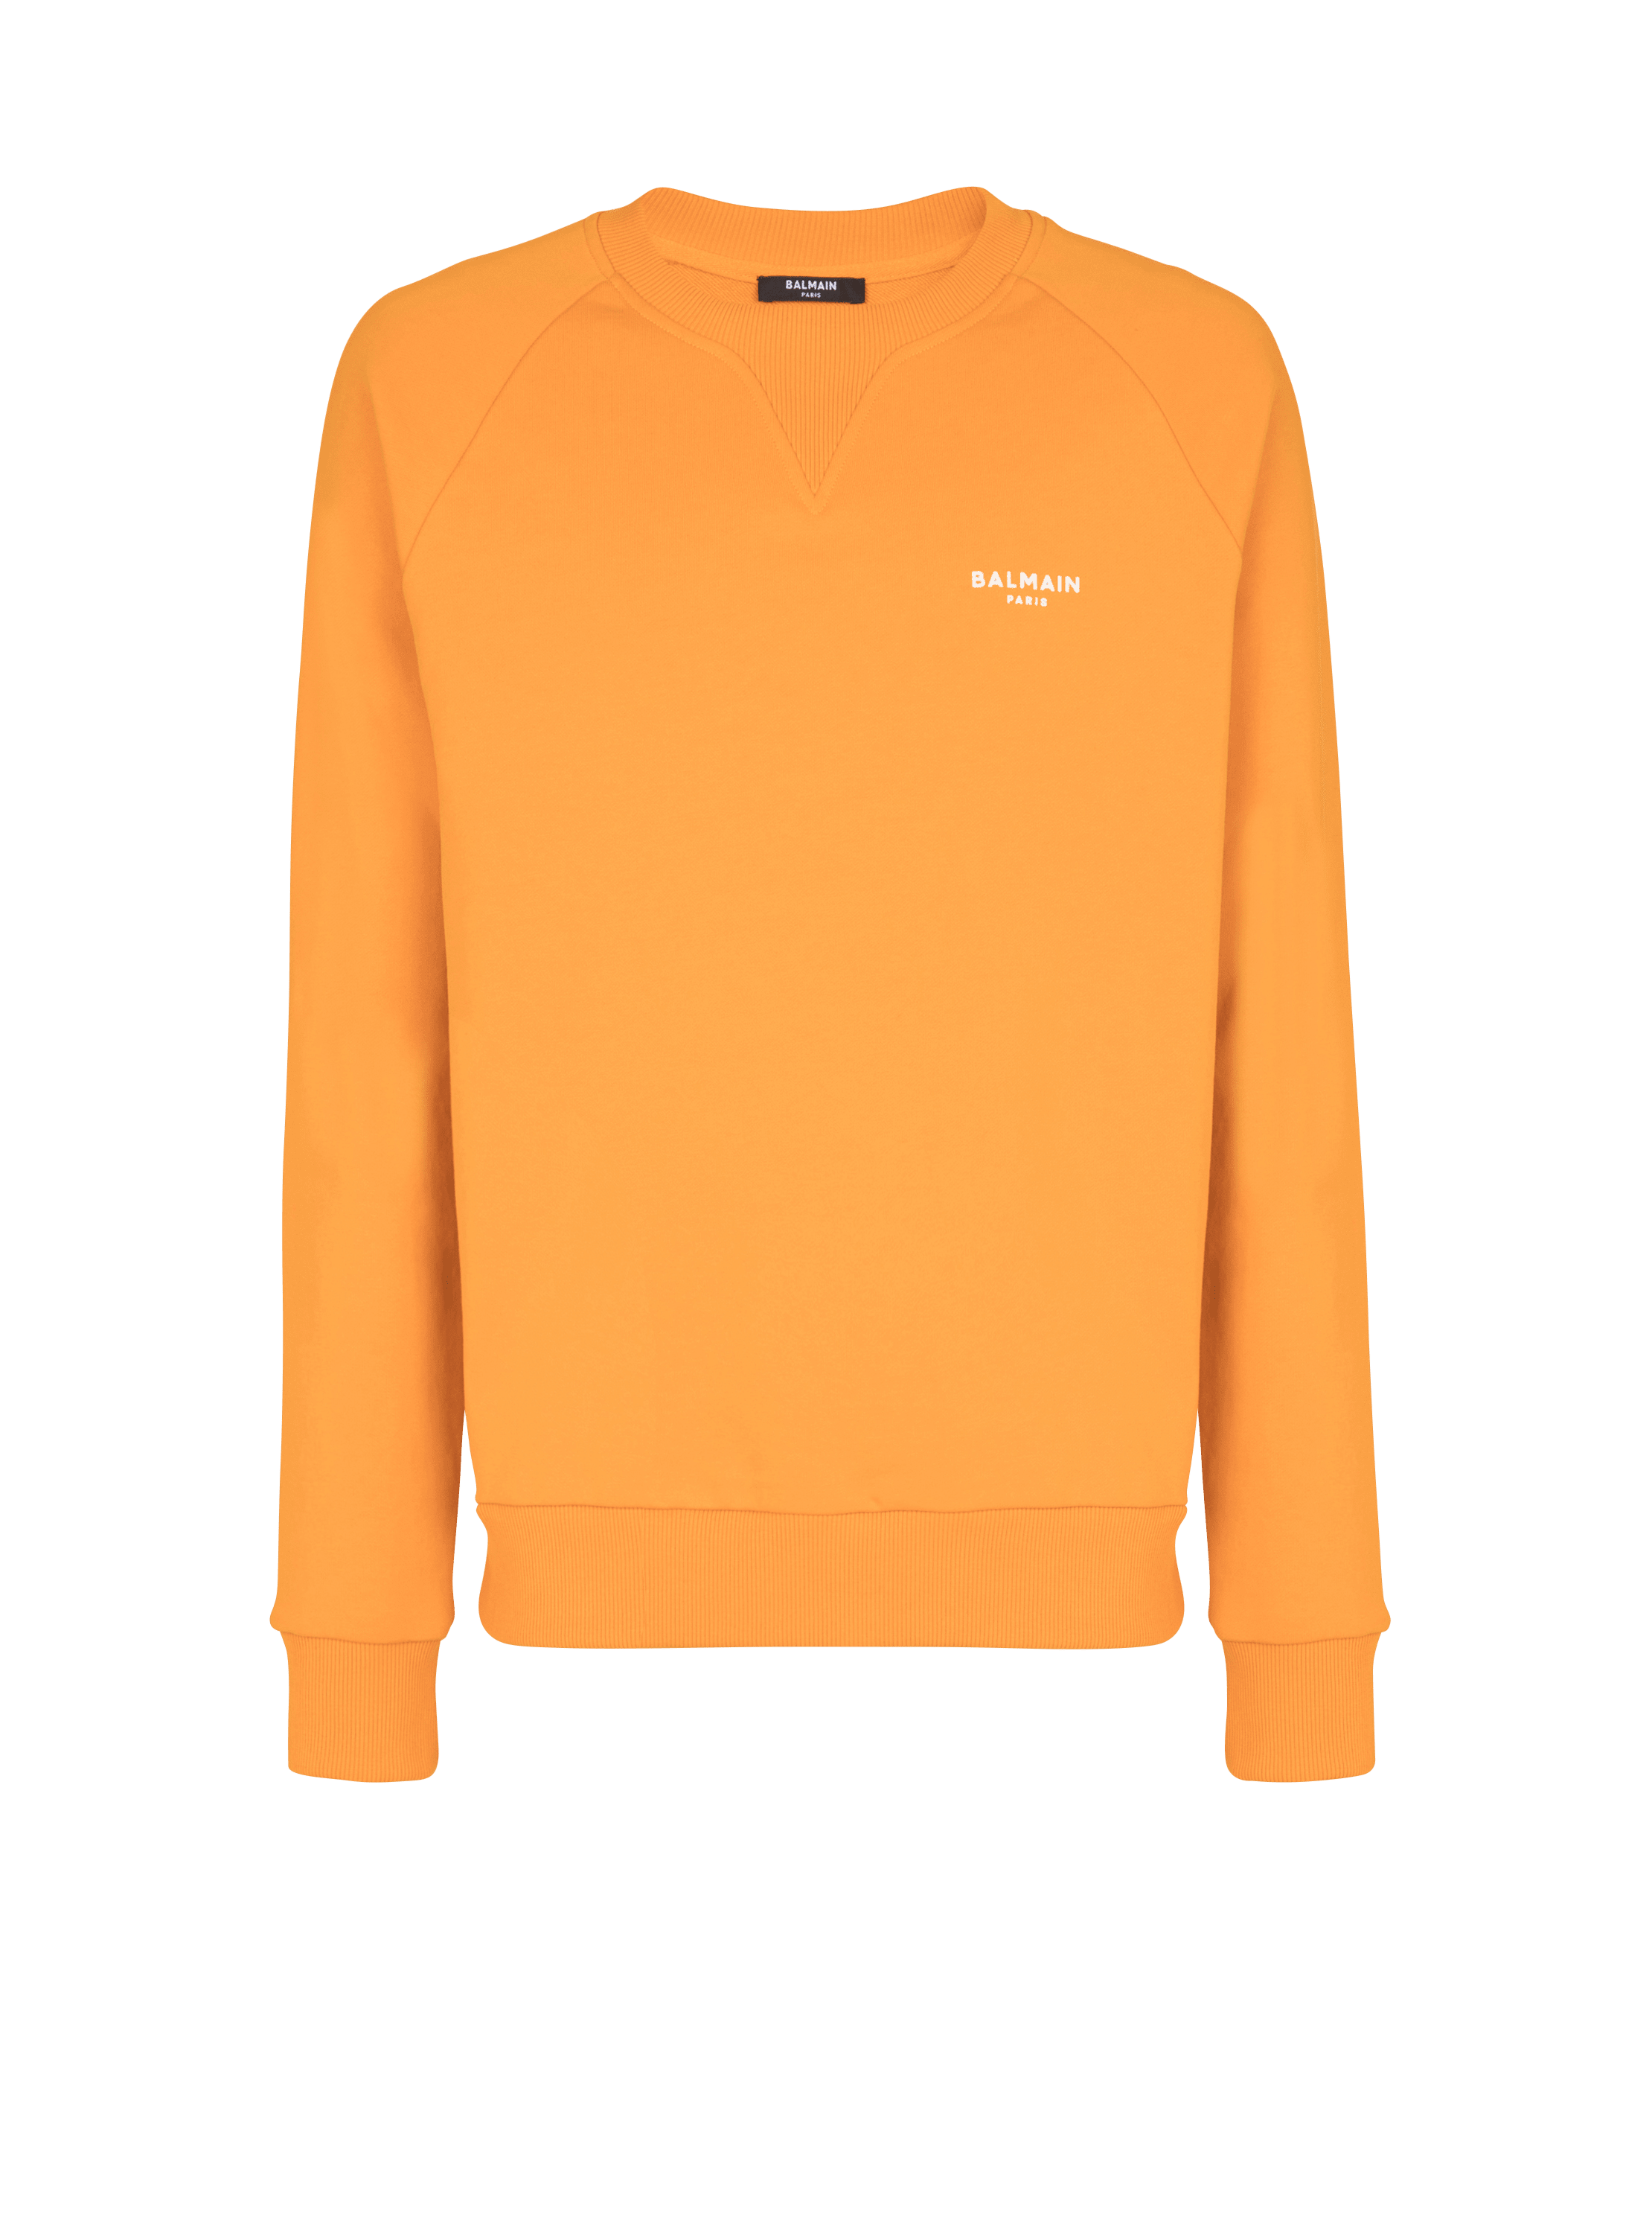 Balmain巴尔曼标志印花环保设计棉质运动衫, orange, hi-res